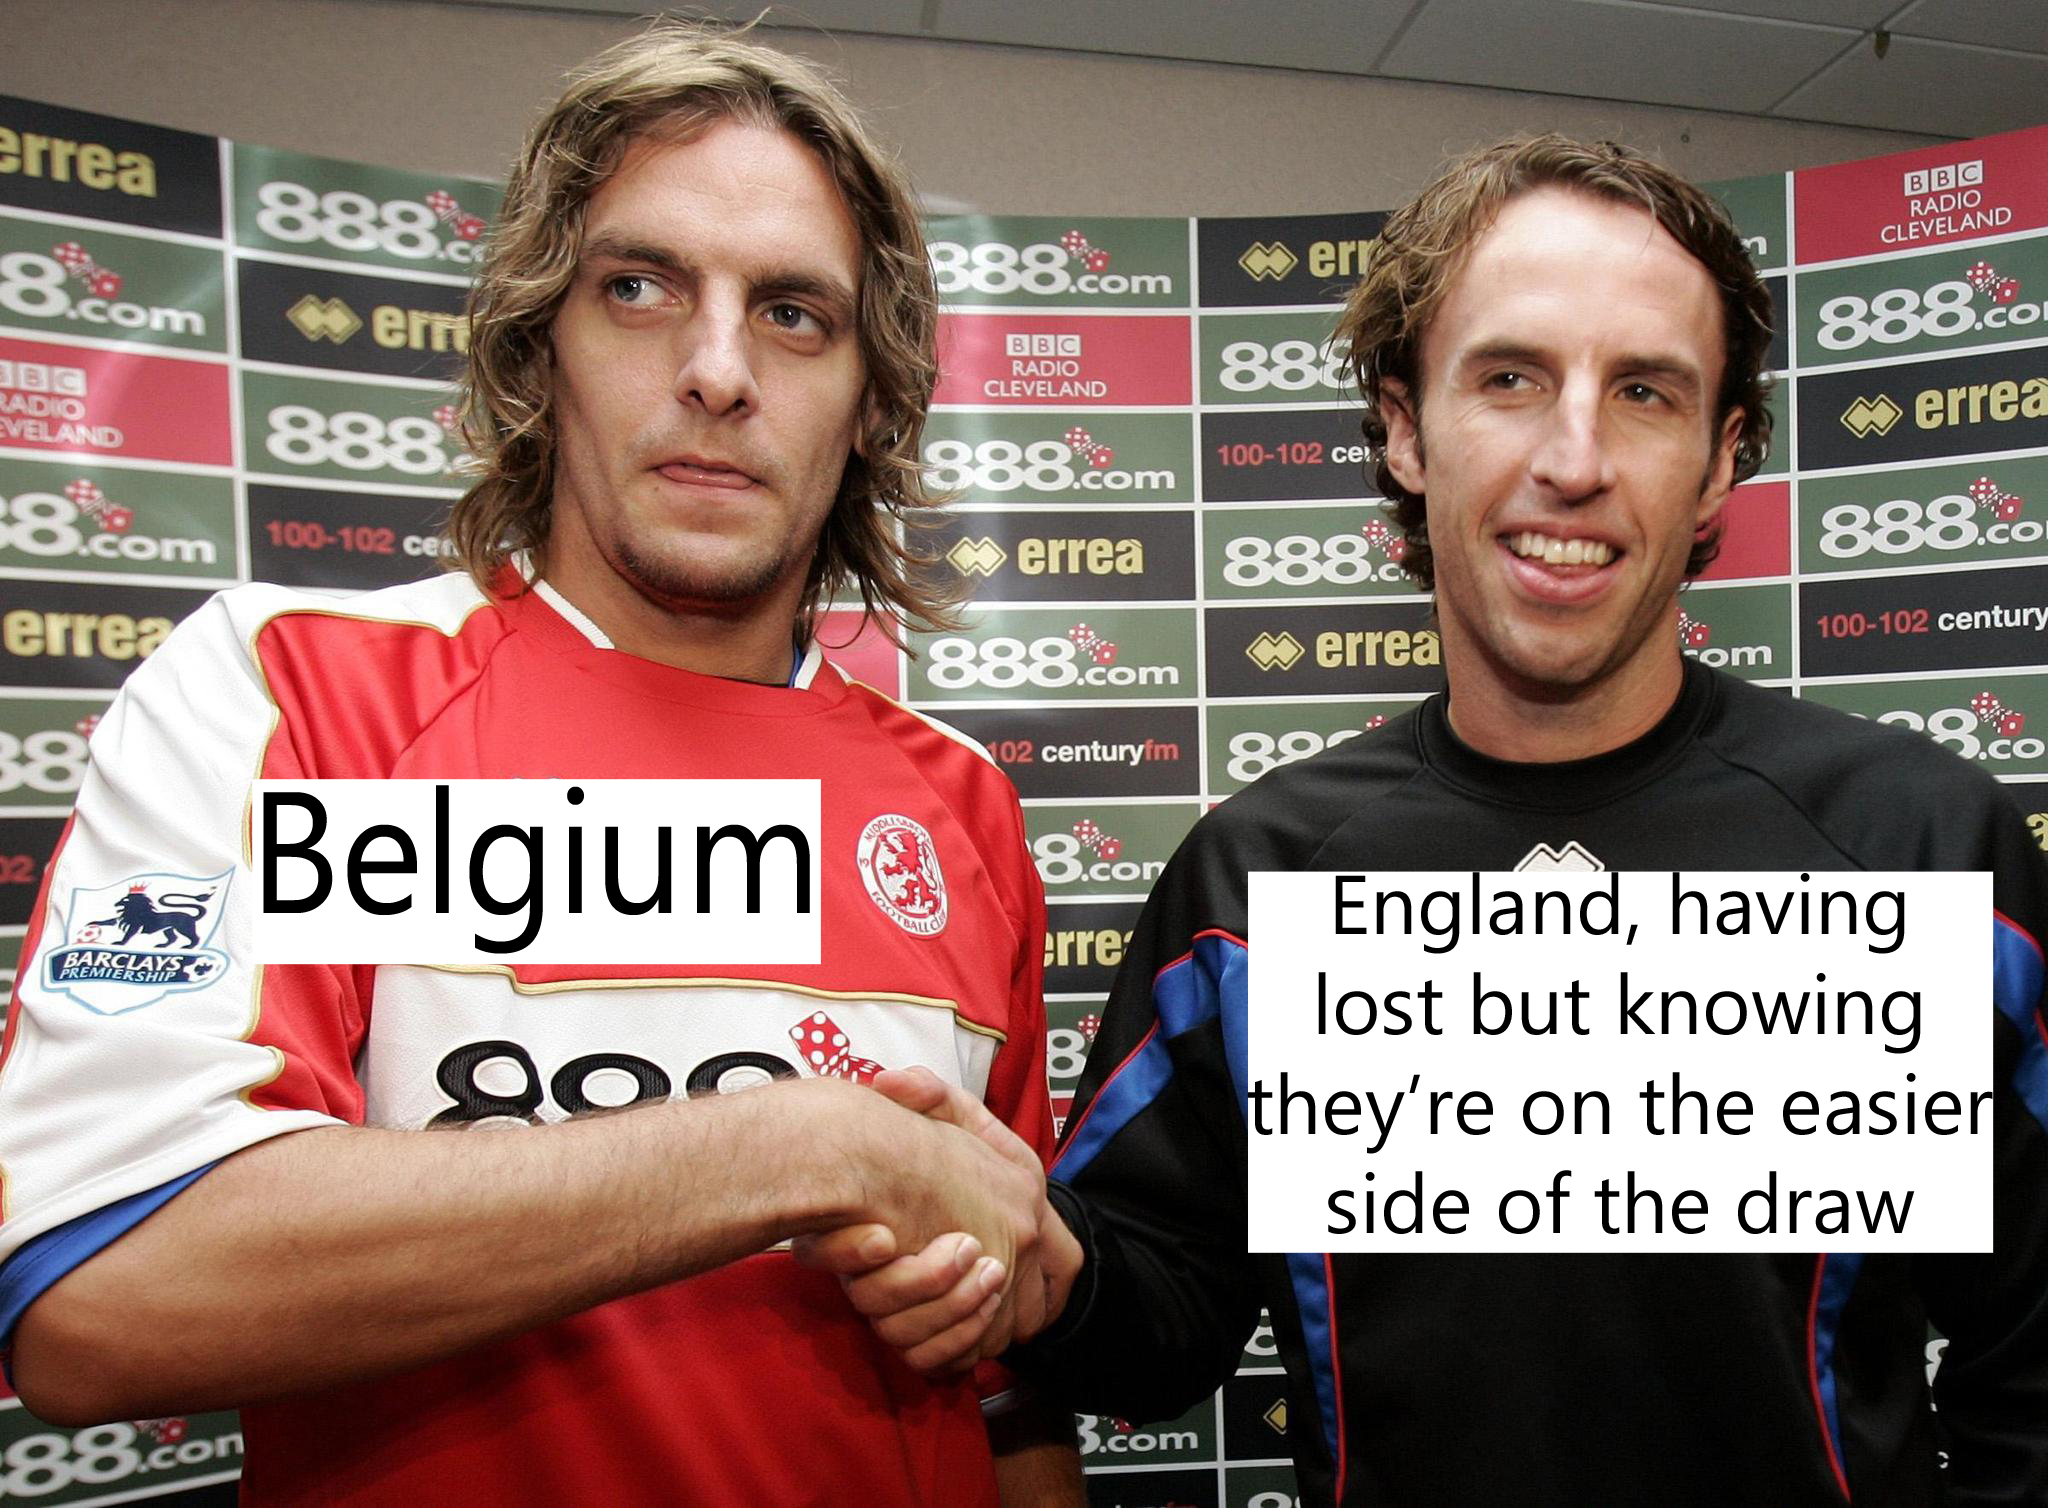 England losing to Belgium meme